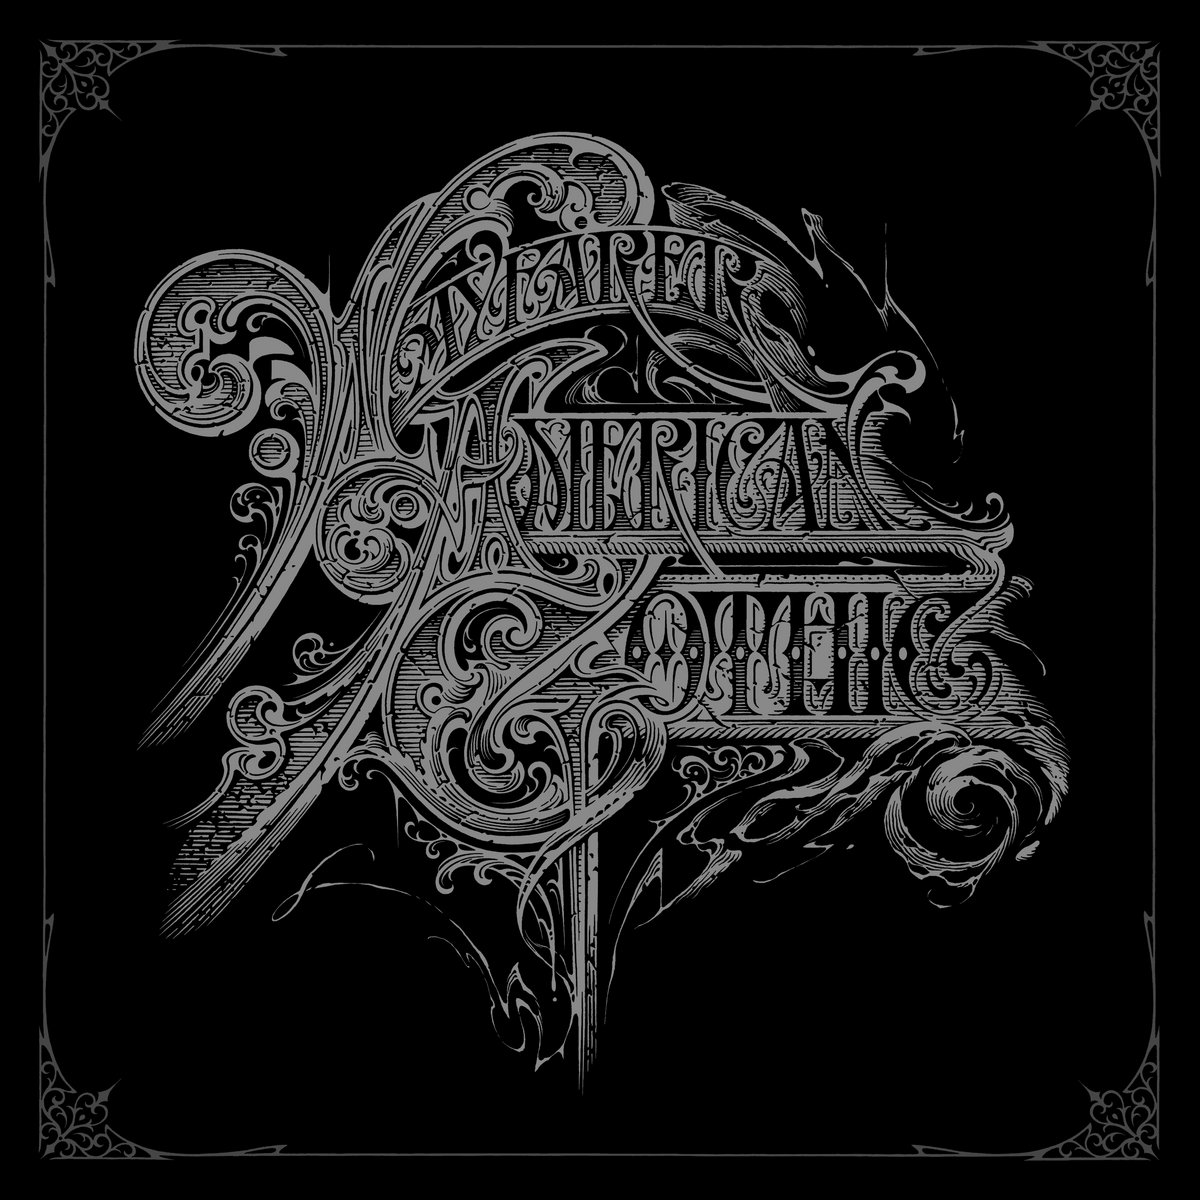 Album review: Wayfarer – American Gothic